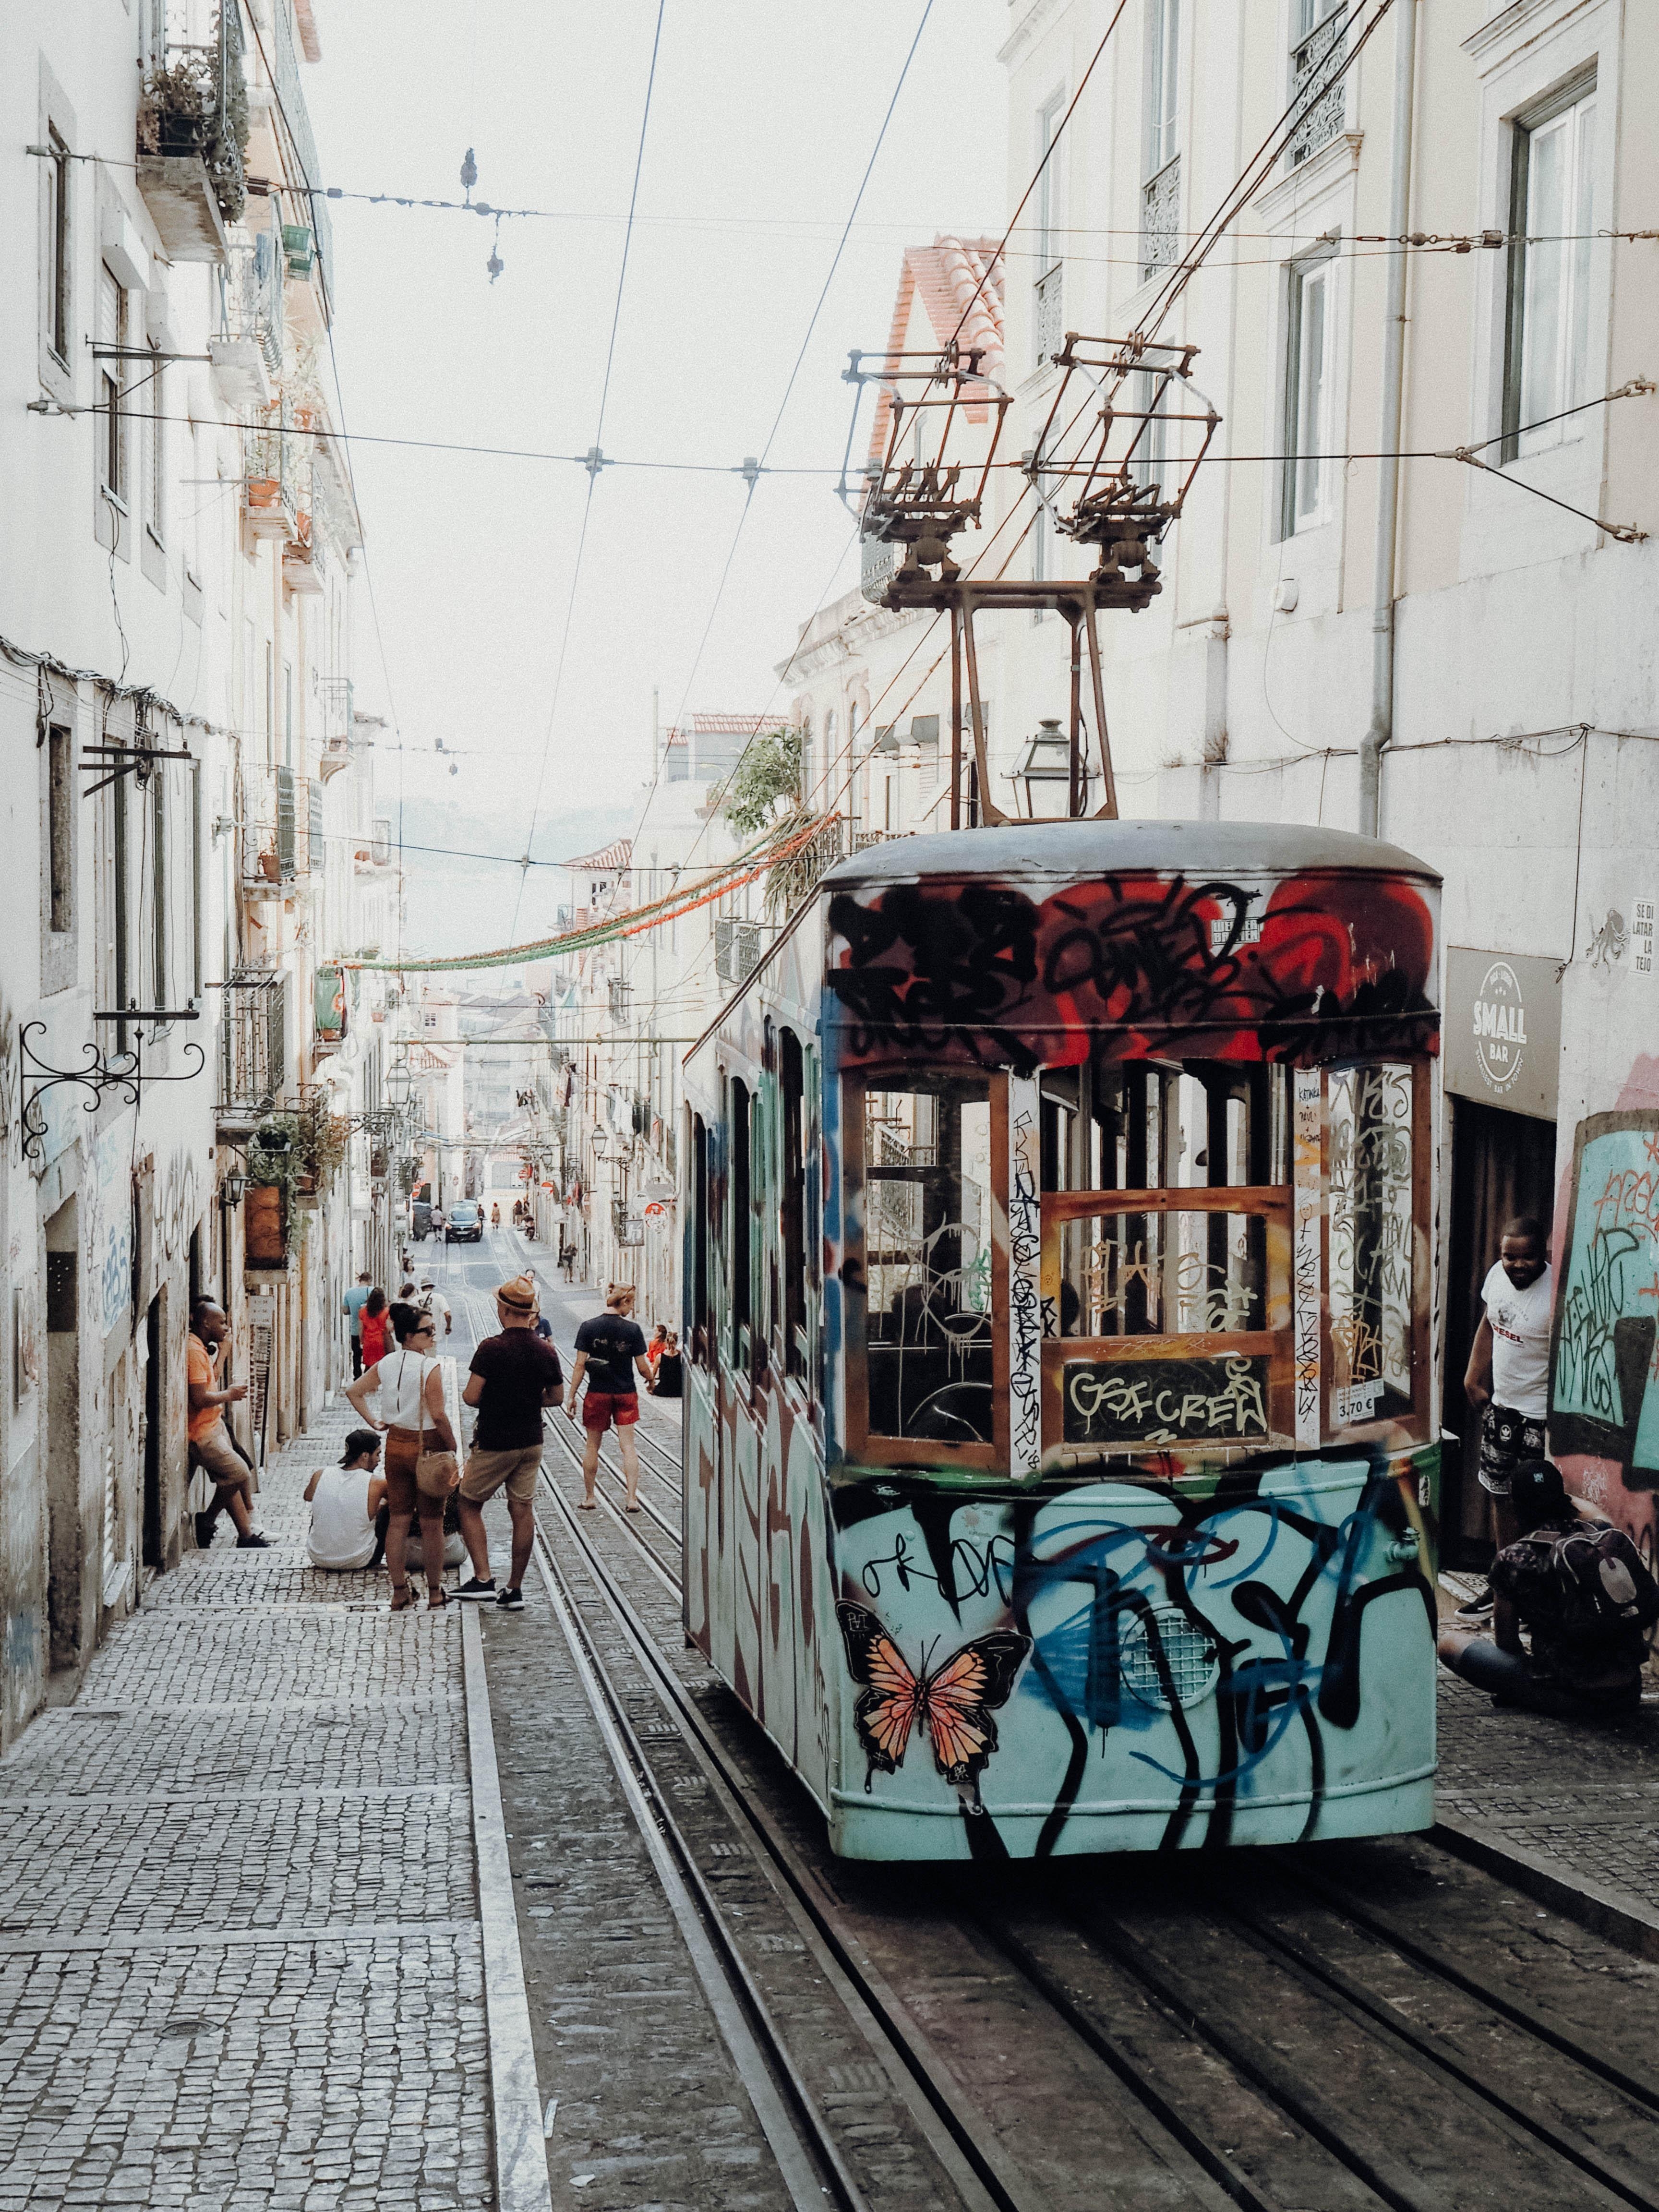 Postkarte aus #Lissabon 🇵🇹
#travel #urlaub #elevadordabica